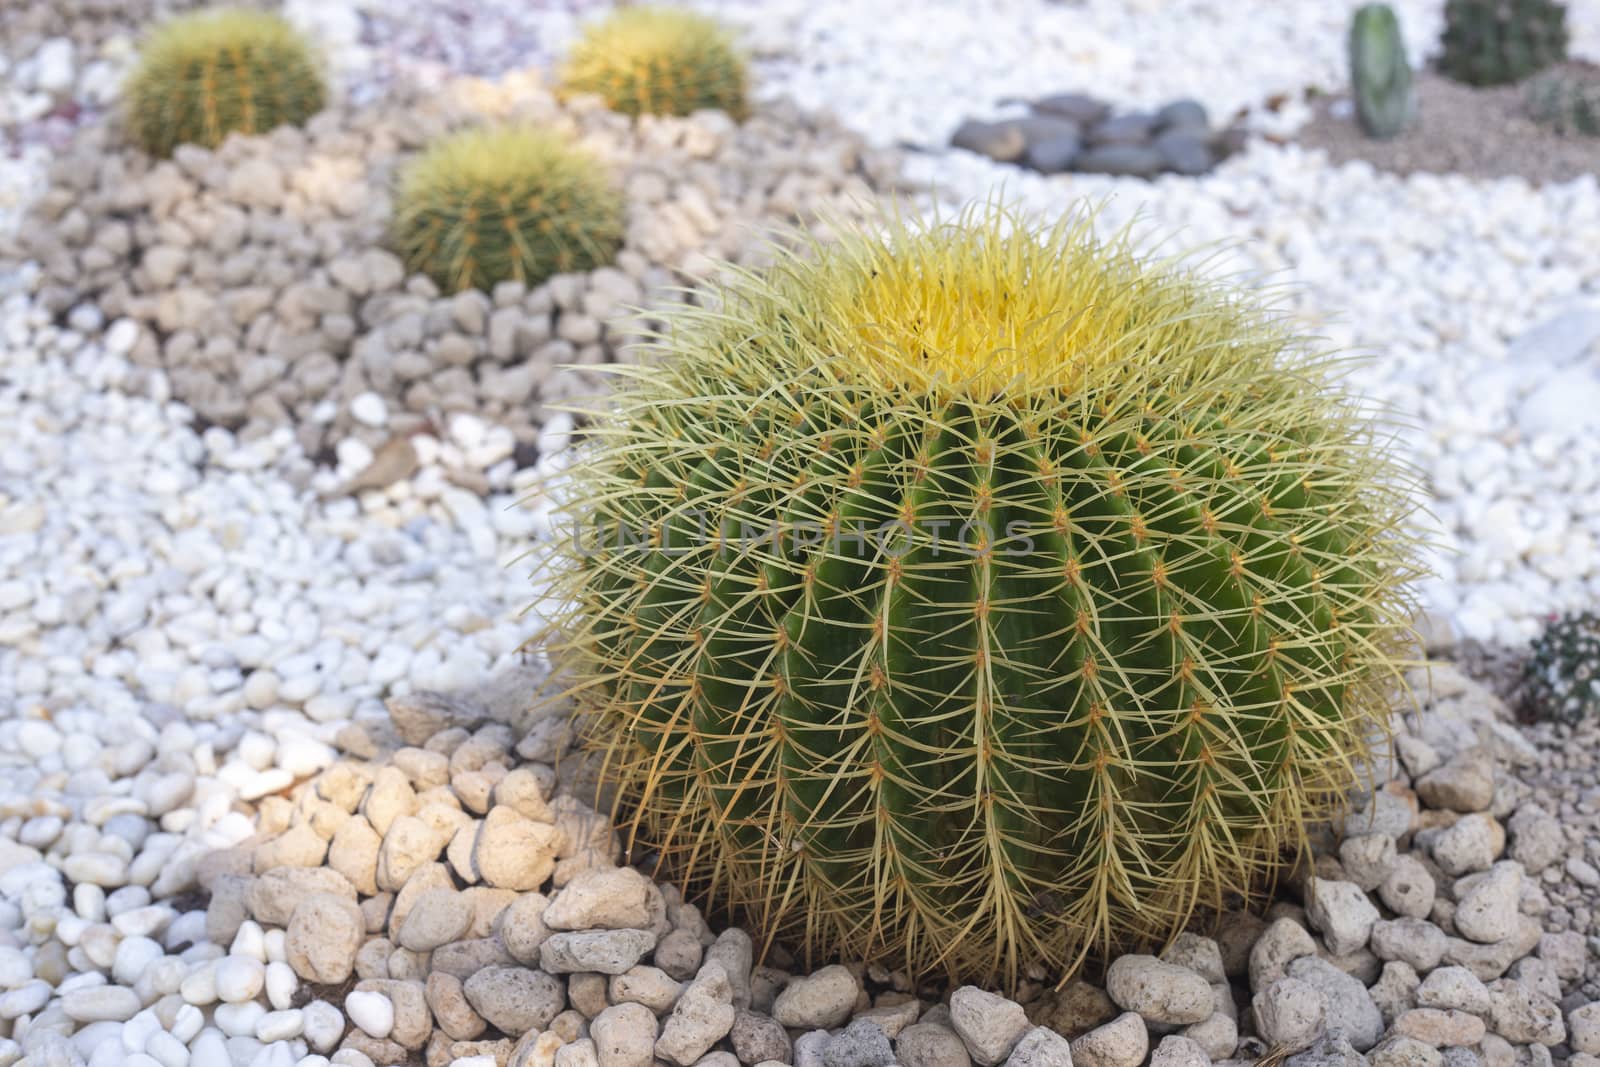 Echinocactus cactus with stone in the desert garden